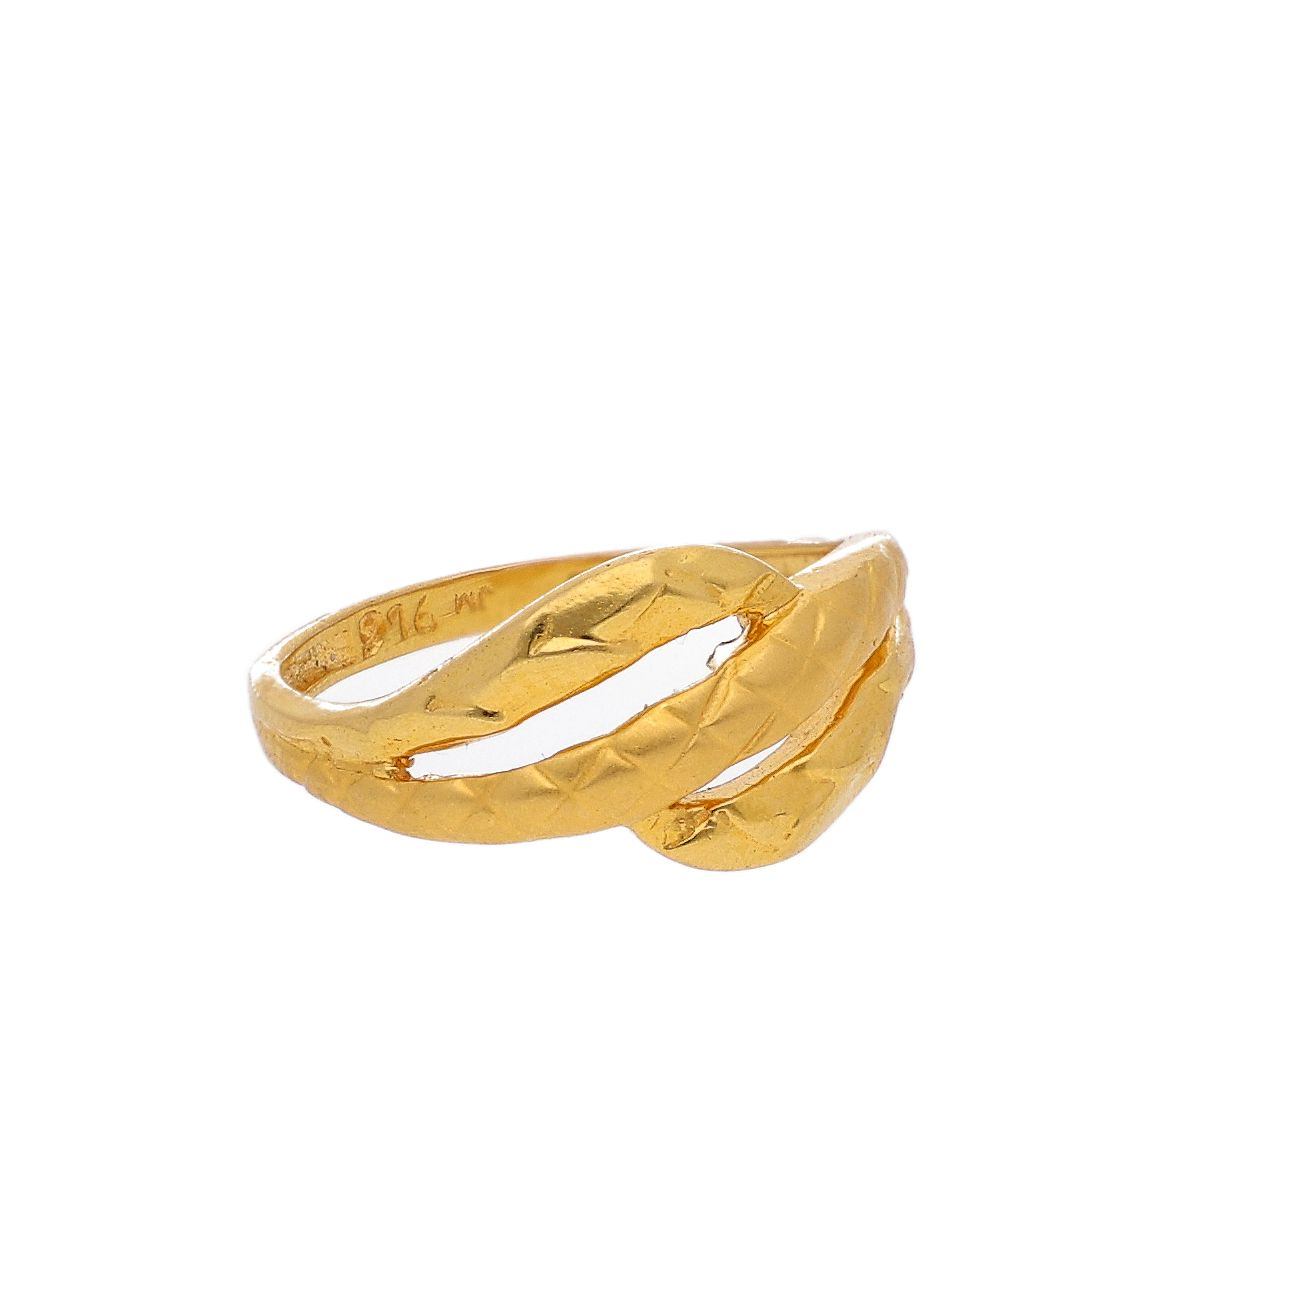 The Banana Leaf Gold Ring